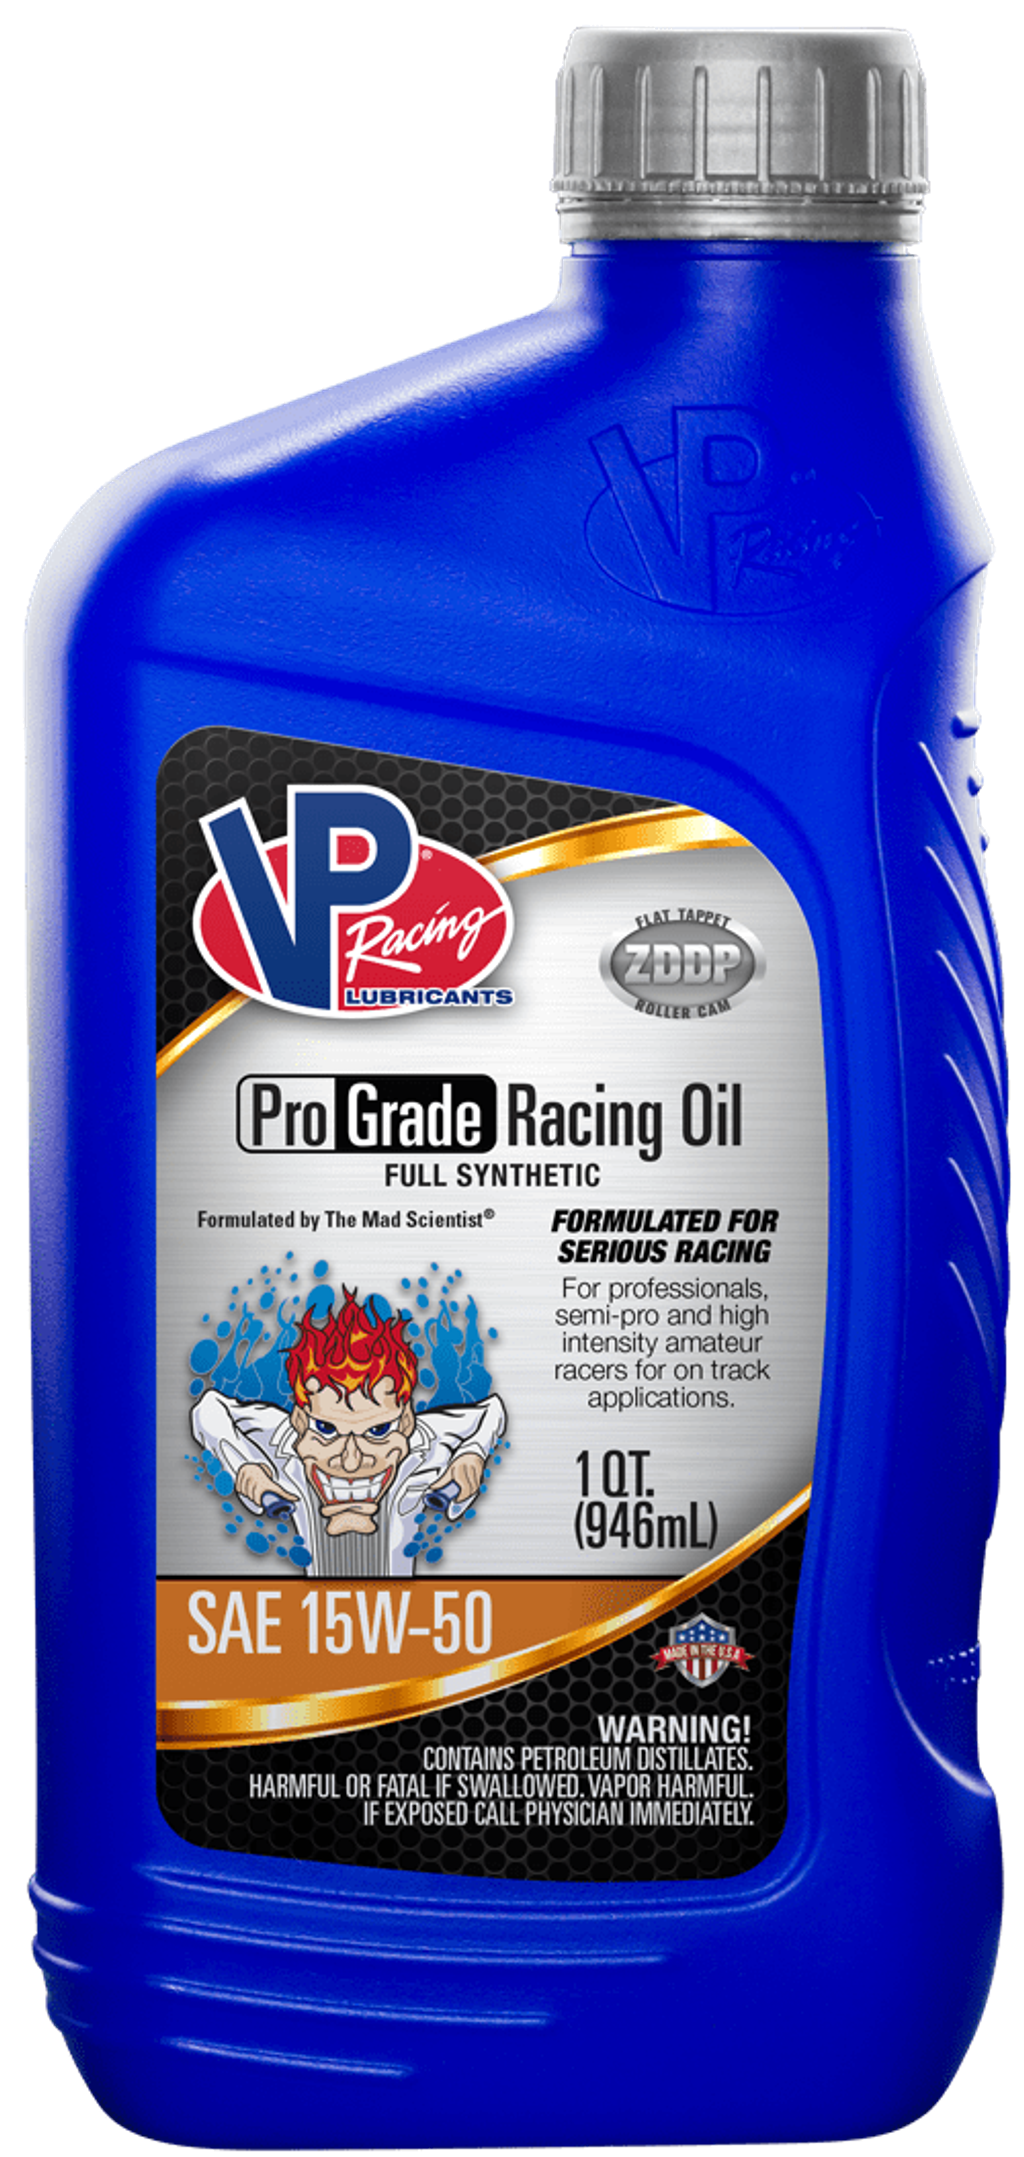 Pro-Grade-15W-50-racing-oil-